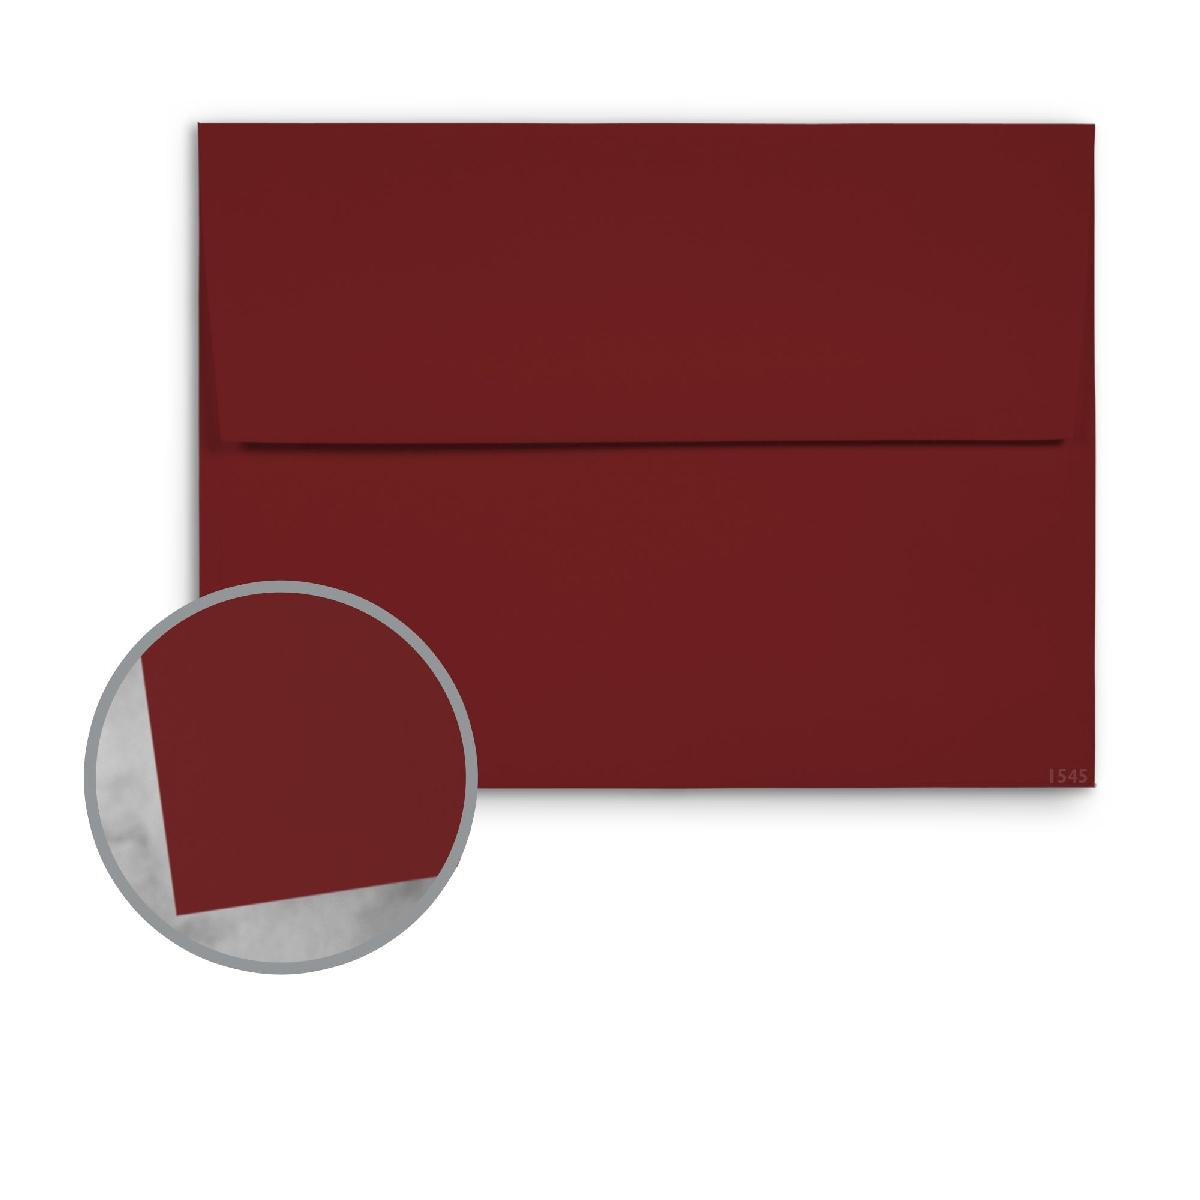 Neenah Paper® Classic Linen Cranberry Ice Linen 80 lb. A-7 5.25 x 7.25 in. Announcement Envelopes 250 per Box